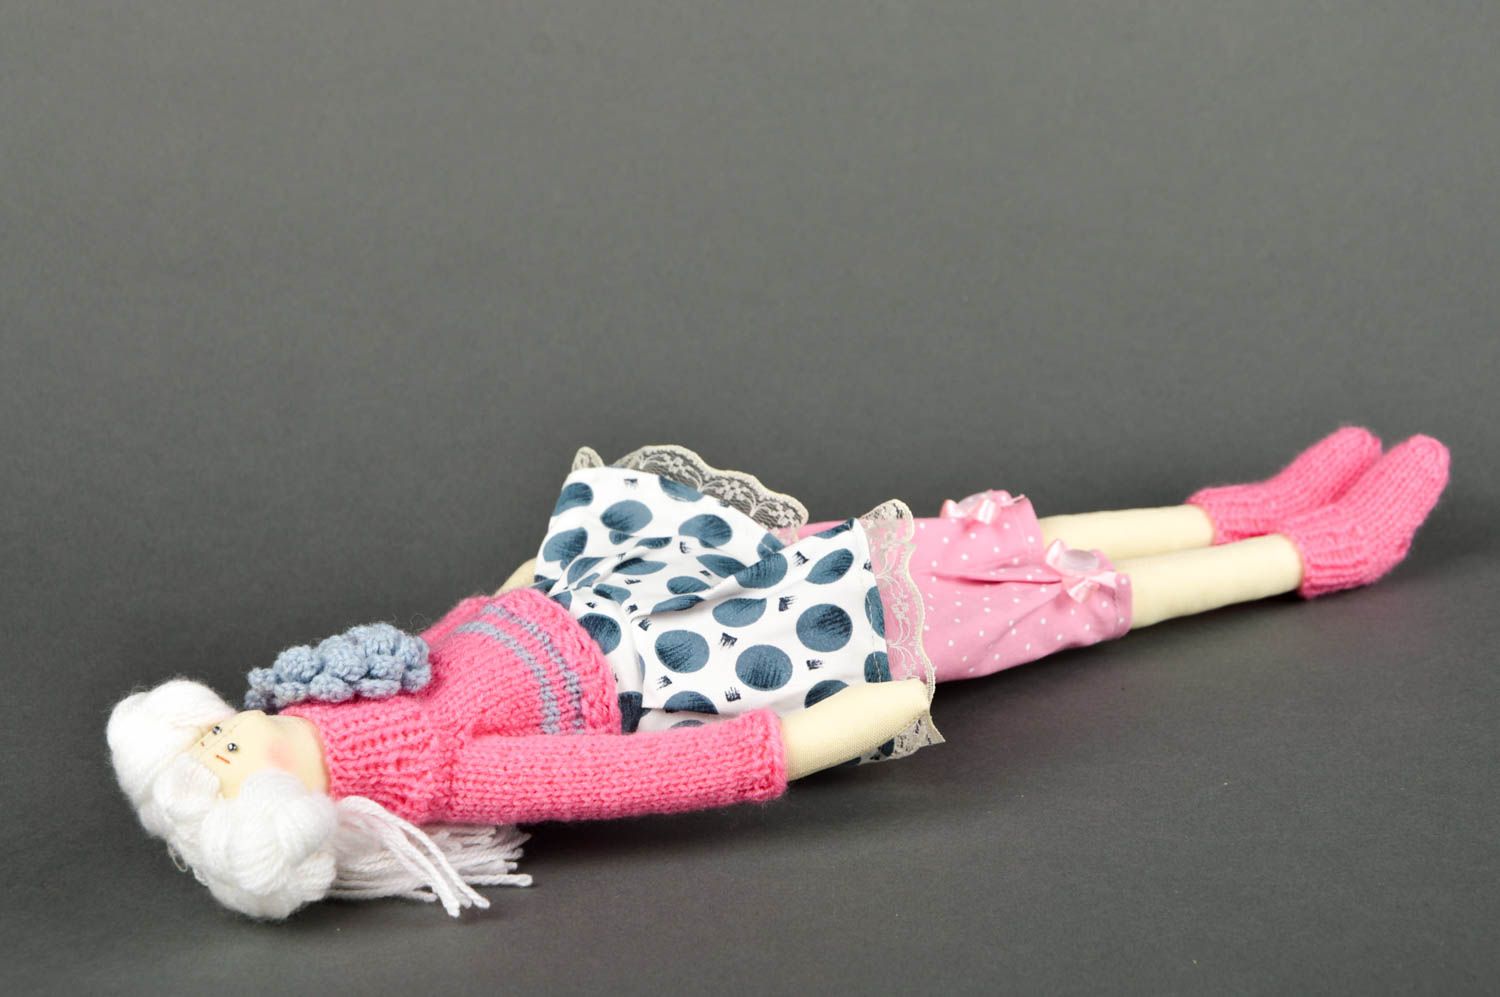 Rag doll handmade fabric toy fabric toy for children nursery decor toys photo 3